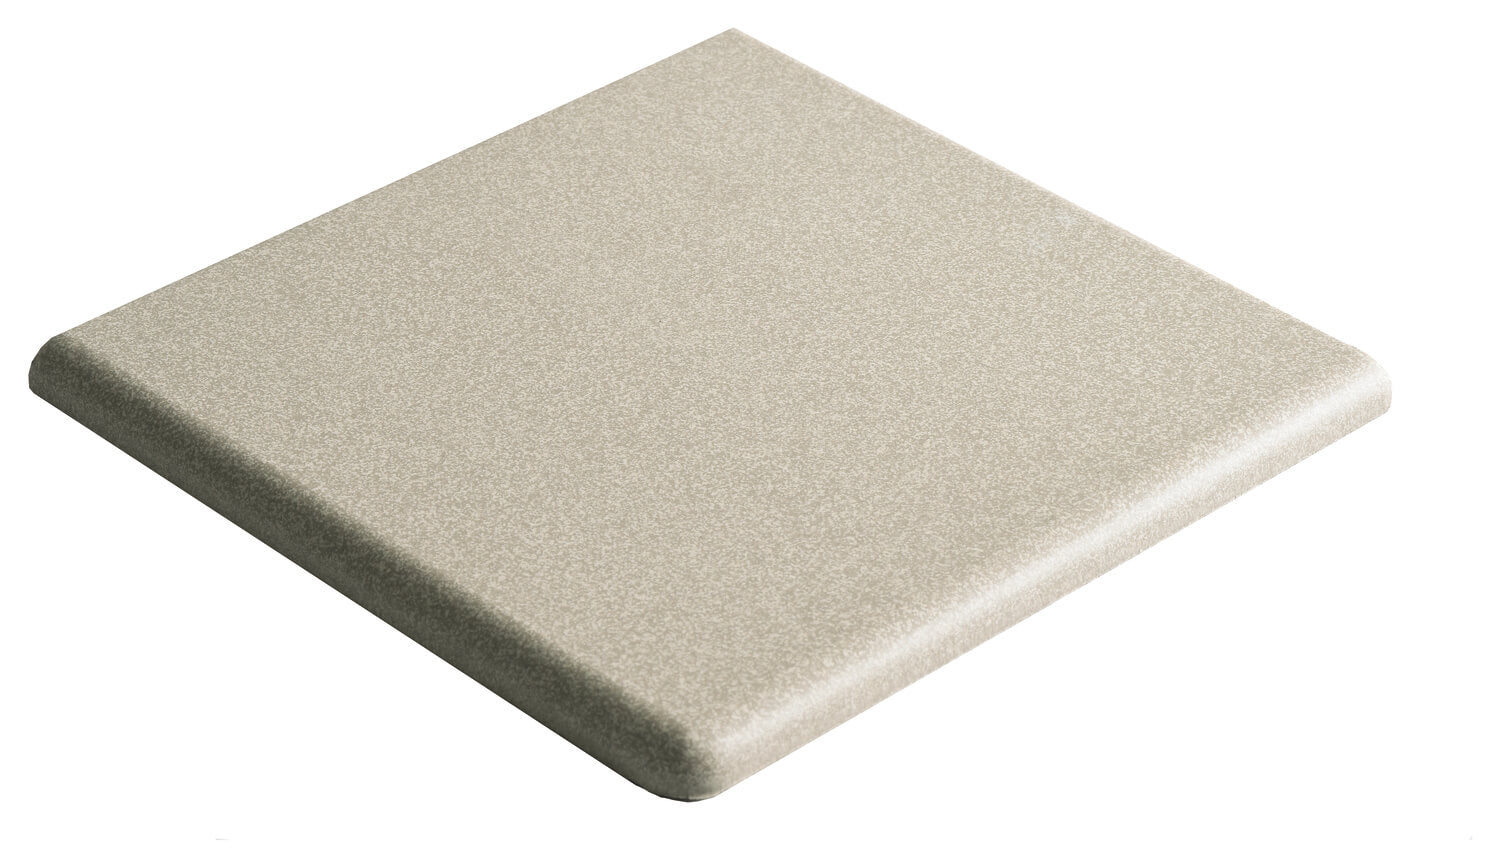 Dorset Woolliscroft Steel Grey Round Edge External Slip Resistant Quarry Tile 148x148mm